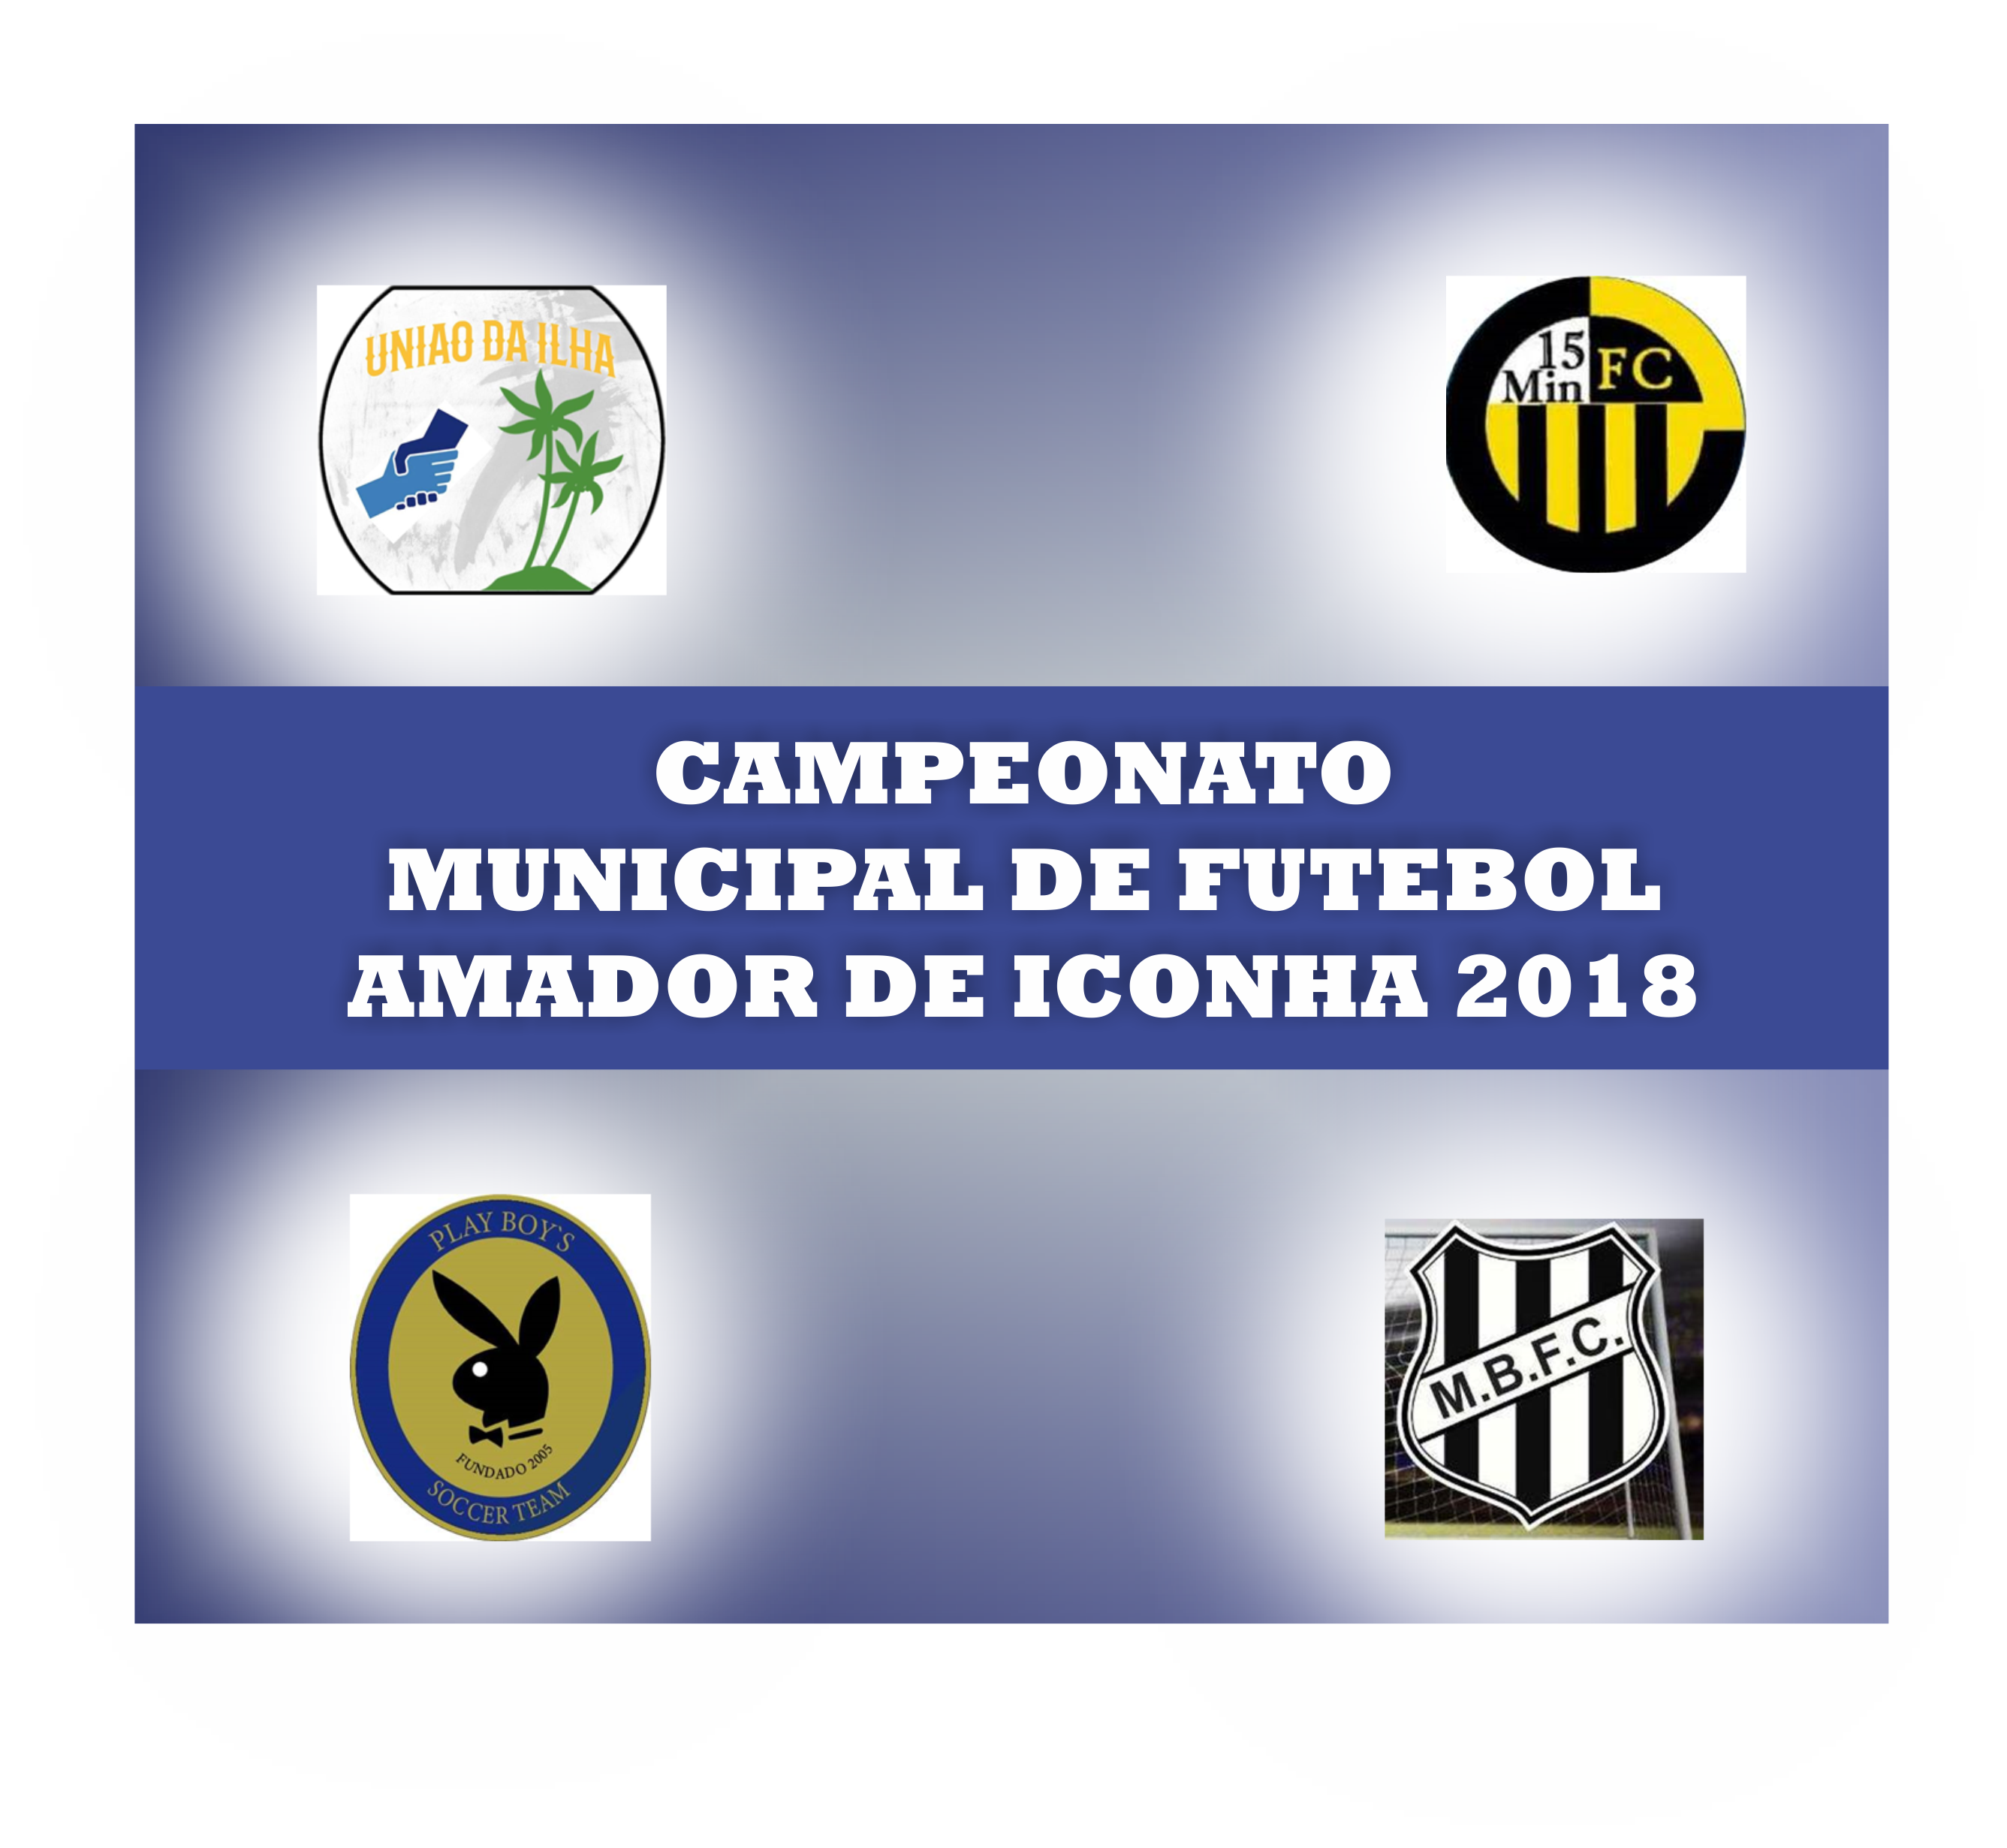 Raio-x “Conheça os pontos fortes e fracos dos semifinalistas do Campeonato Municipal de Iconha”